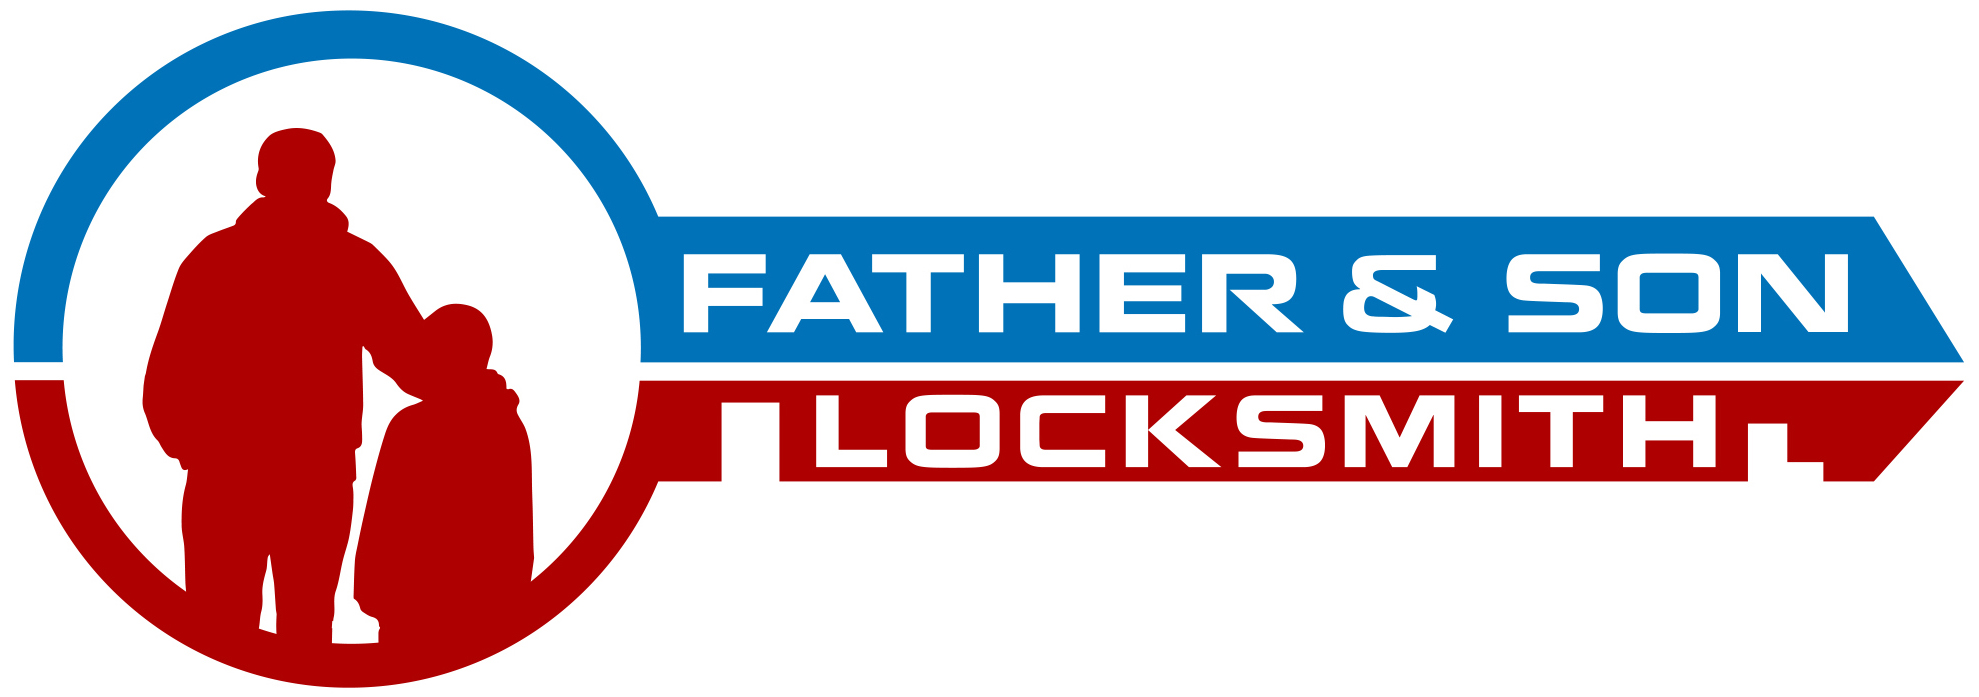 Father & Son Locksmith